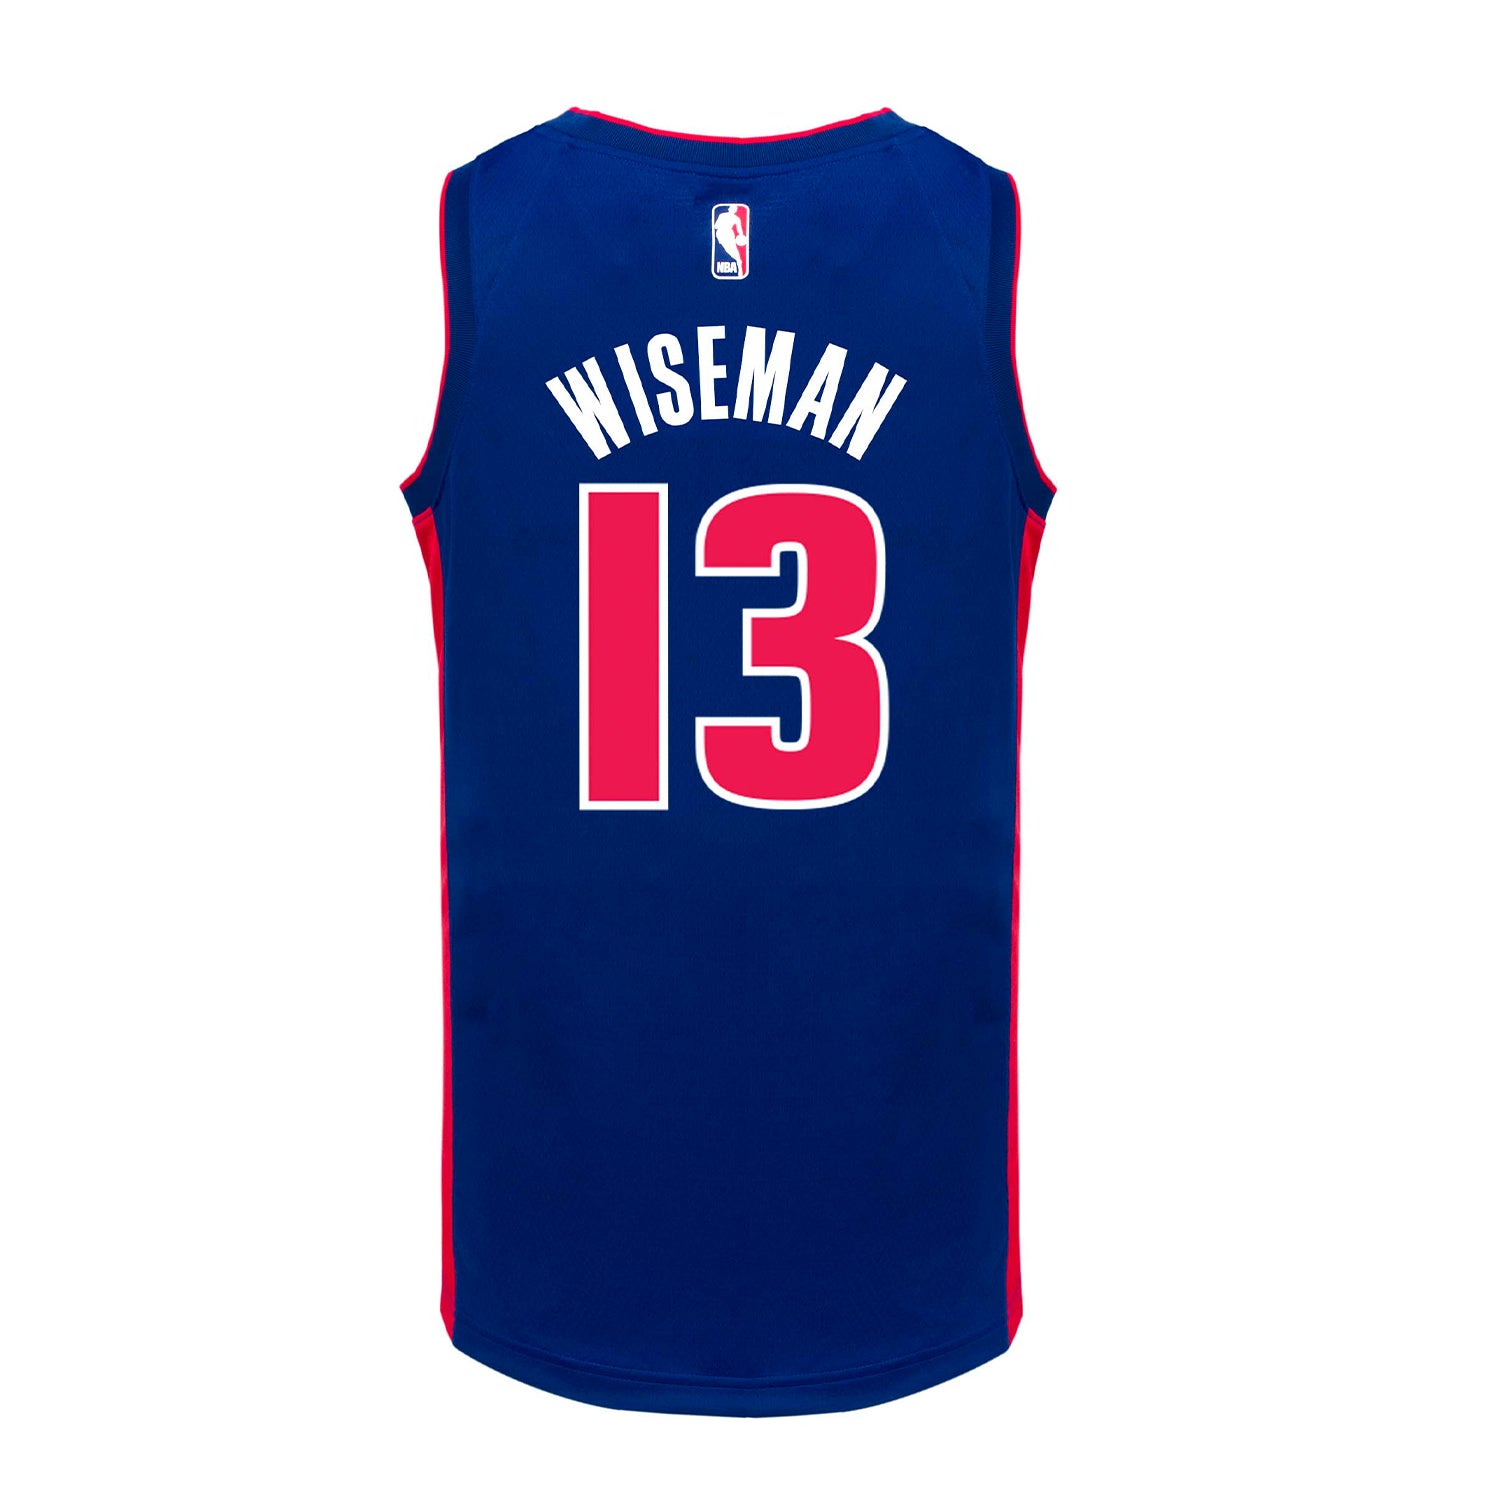 Washington Wizards Nike Association Swingman Jersey - Custom - Mens